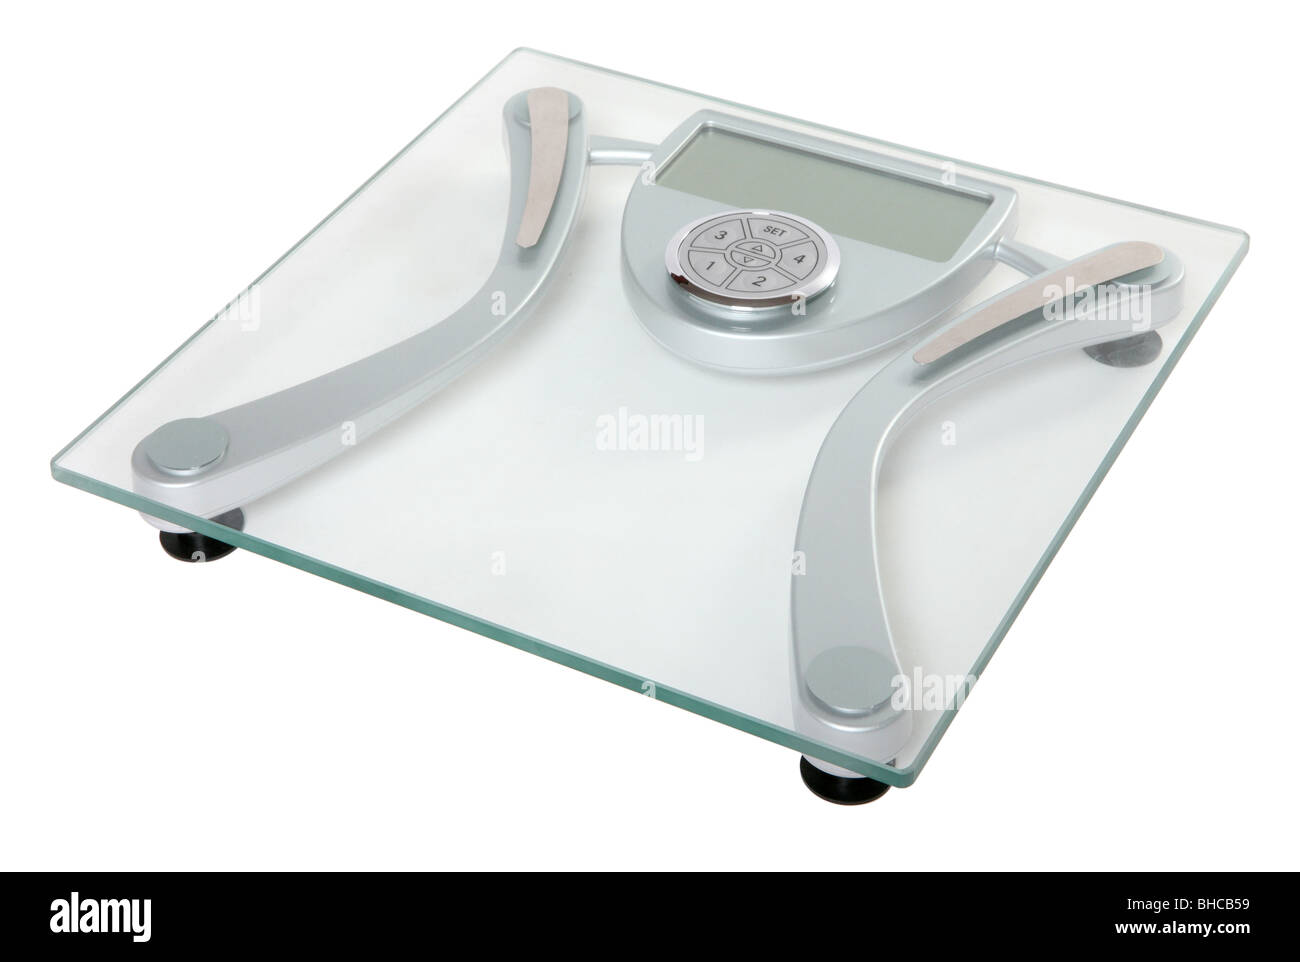 Glass electronic bathroom scales Stock Photo